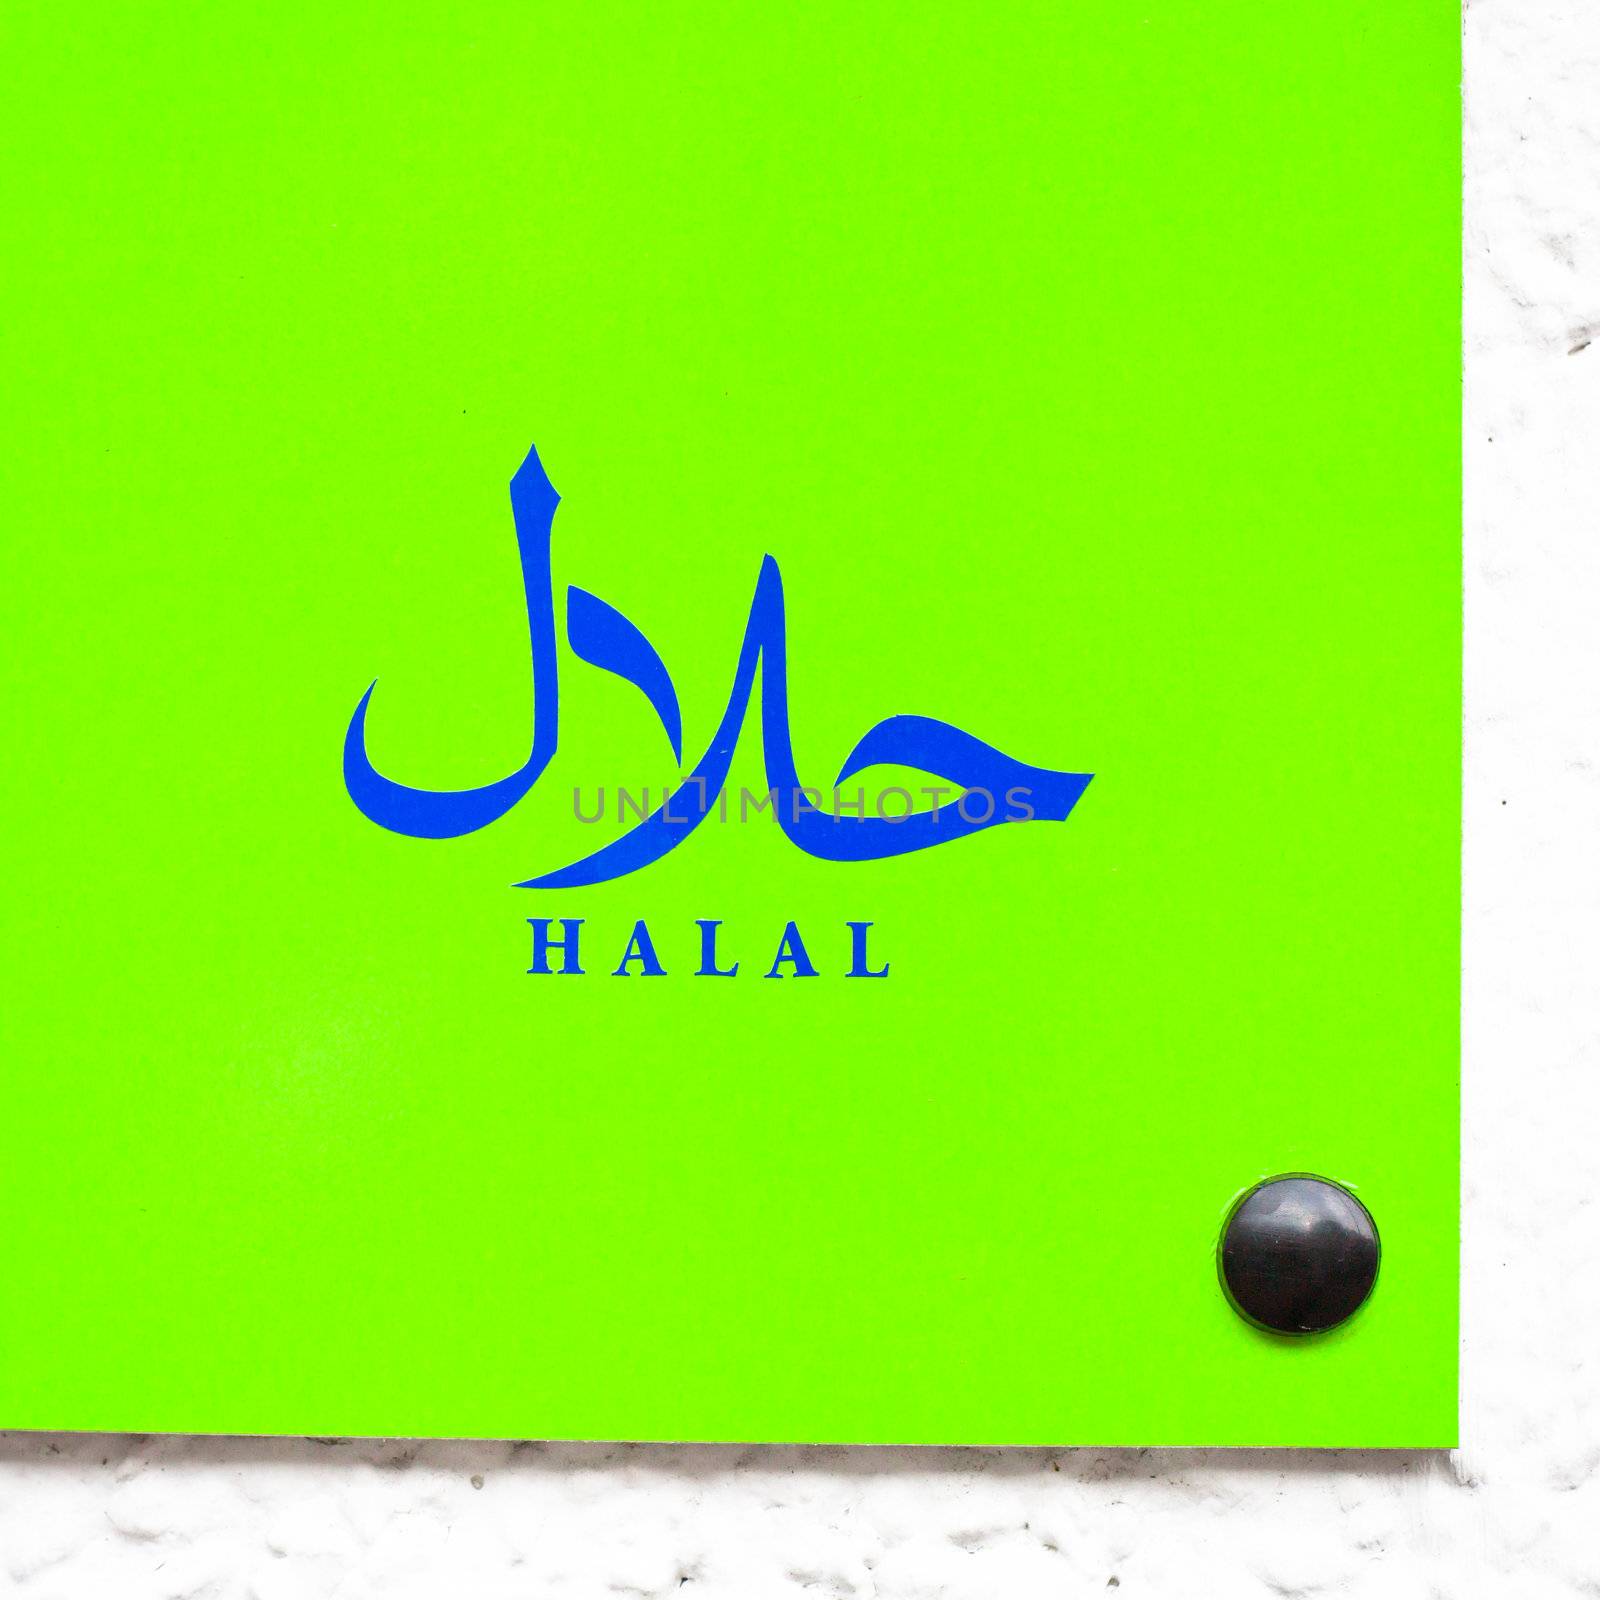 Sign for halal food at a restaurant